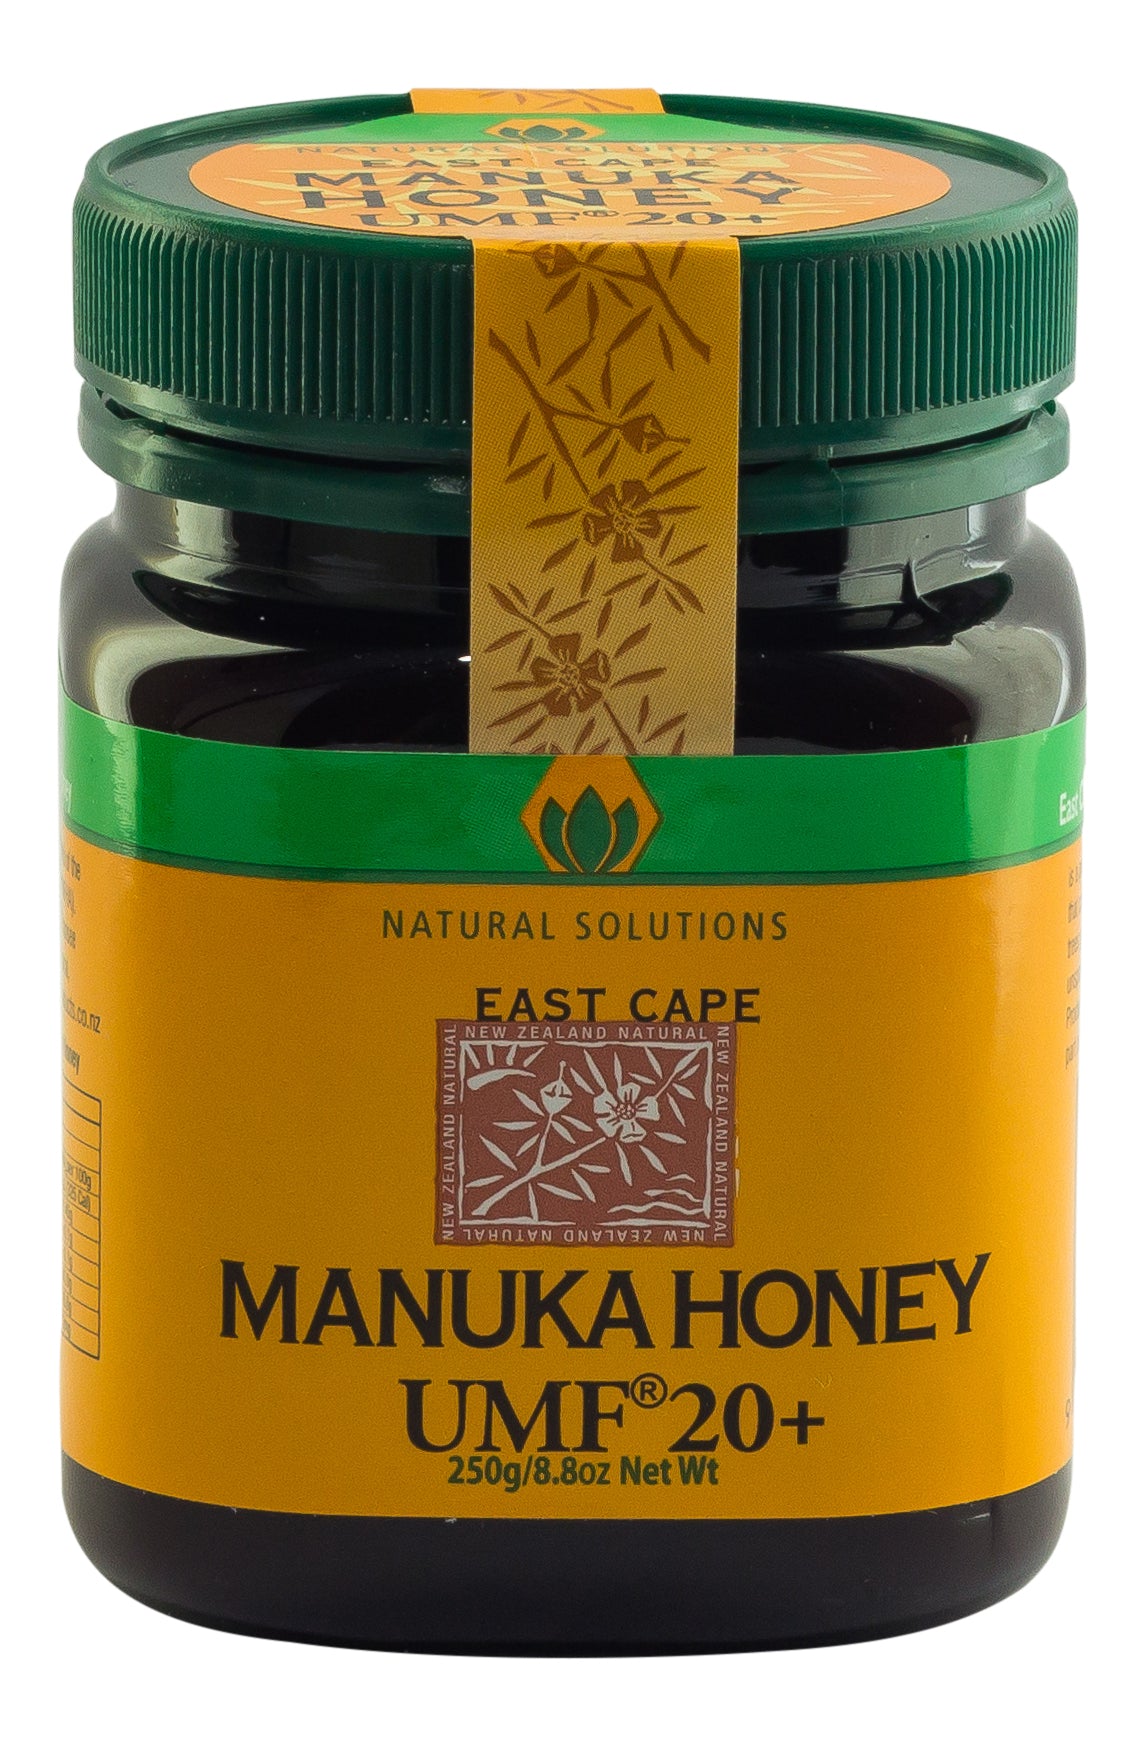 Technology to determine the authenticity of Manuka honey